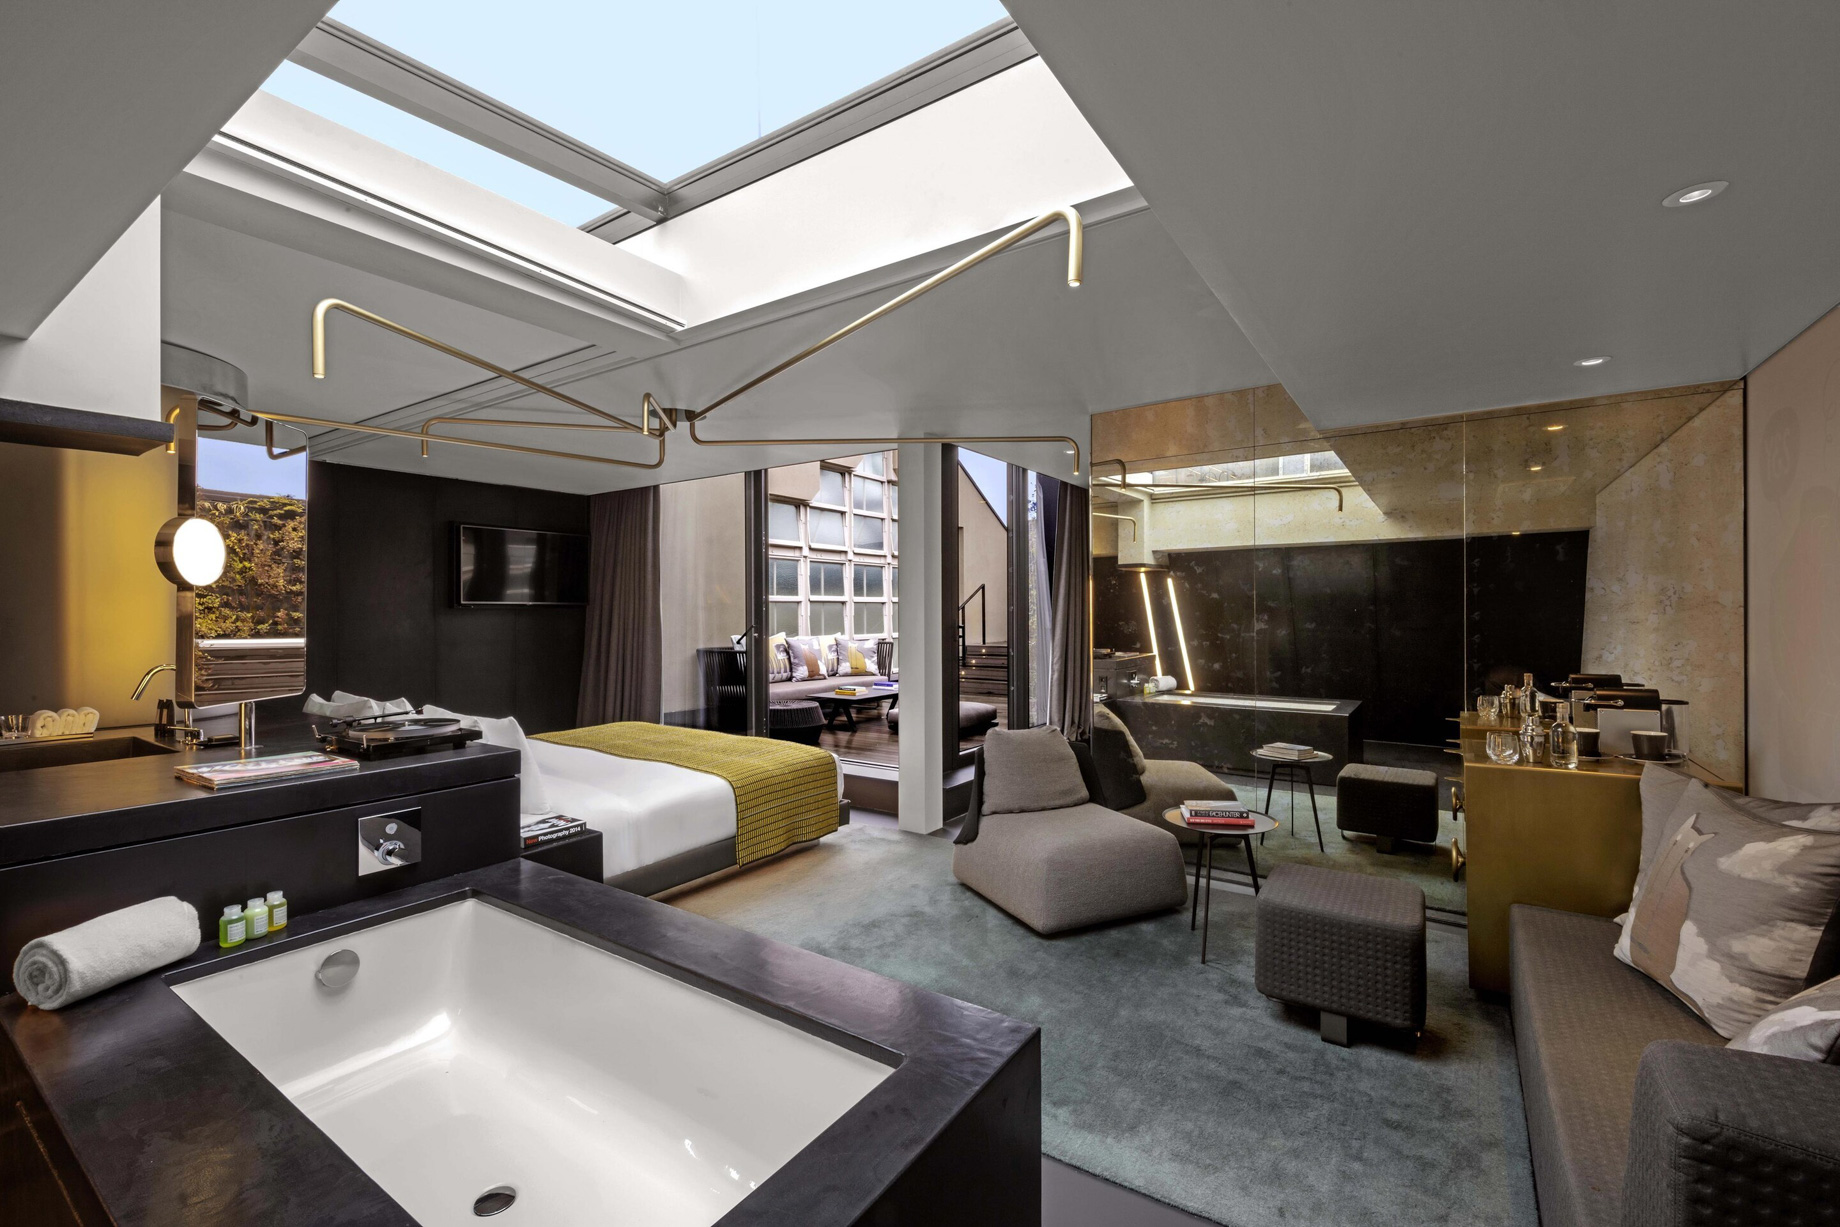 W Amsterdam Hotel – Amsterdam, Netherlands – Fantastic Bank One Bedroom Suite Living Room